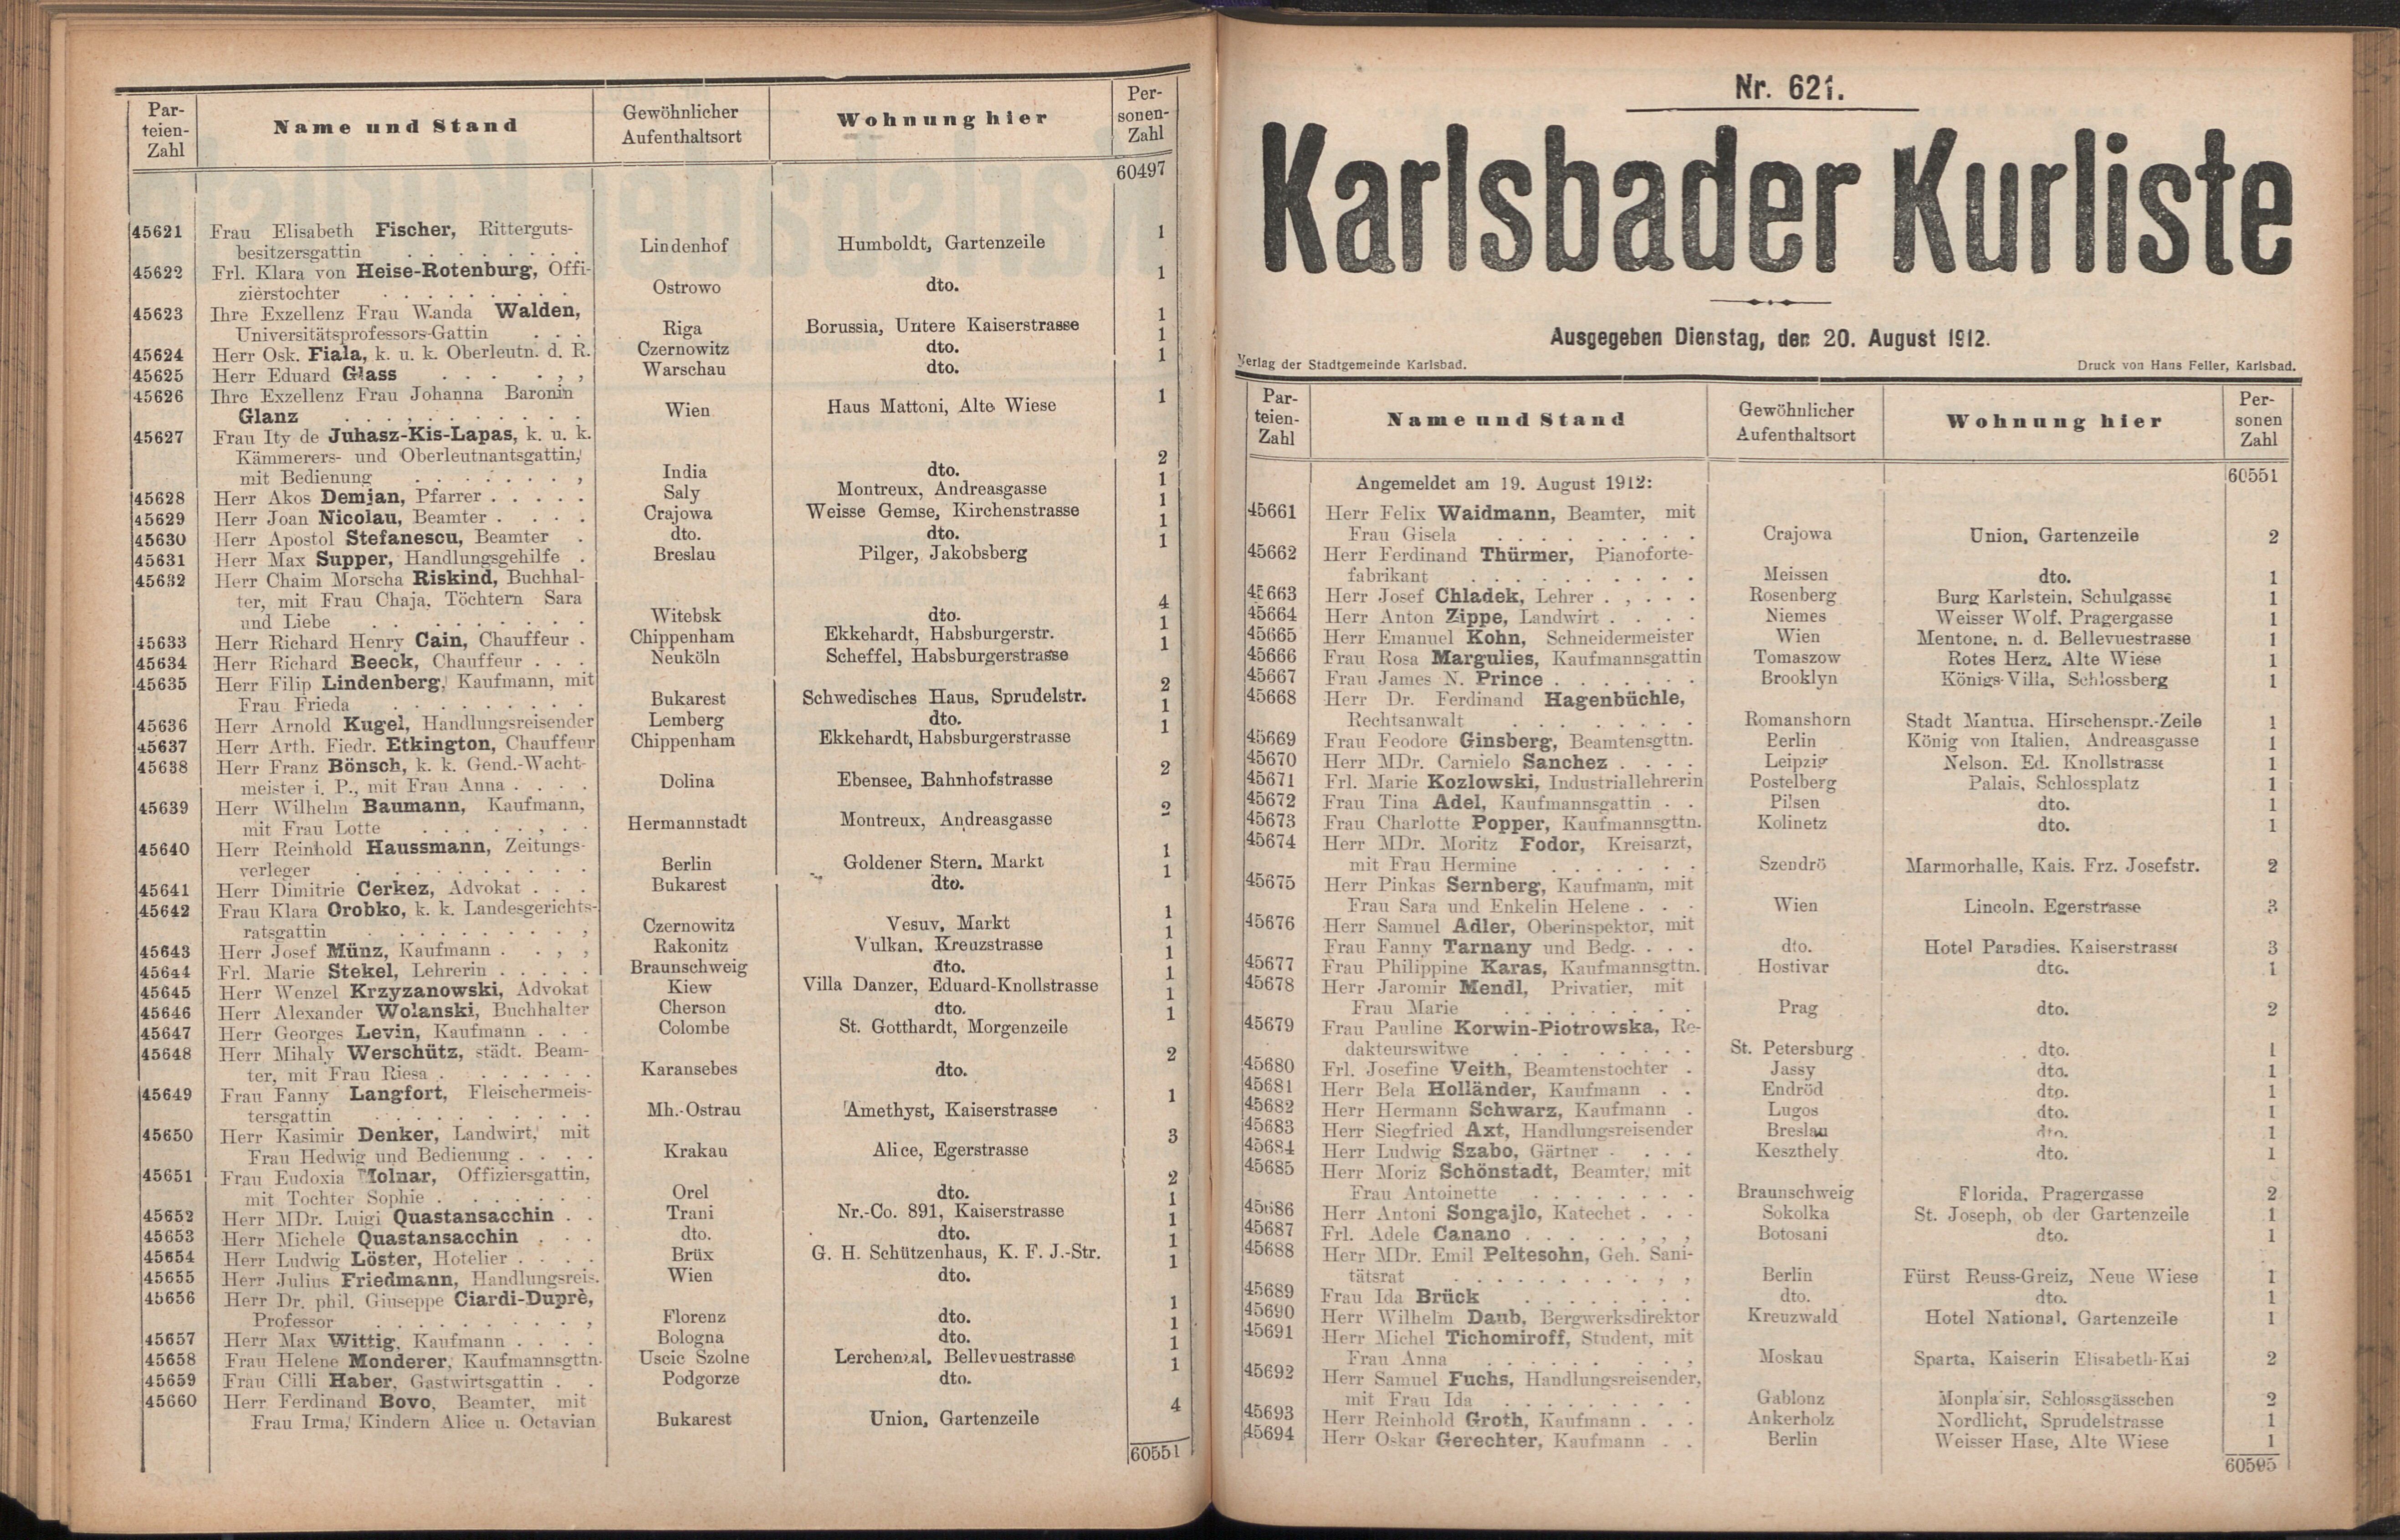 339. soap-kv_knihovna_karlsbader-kurliste-1912-2_3390